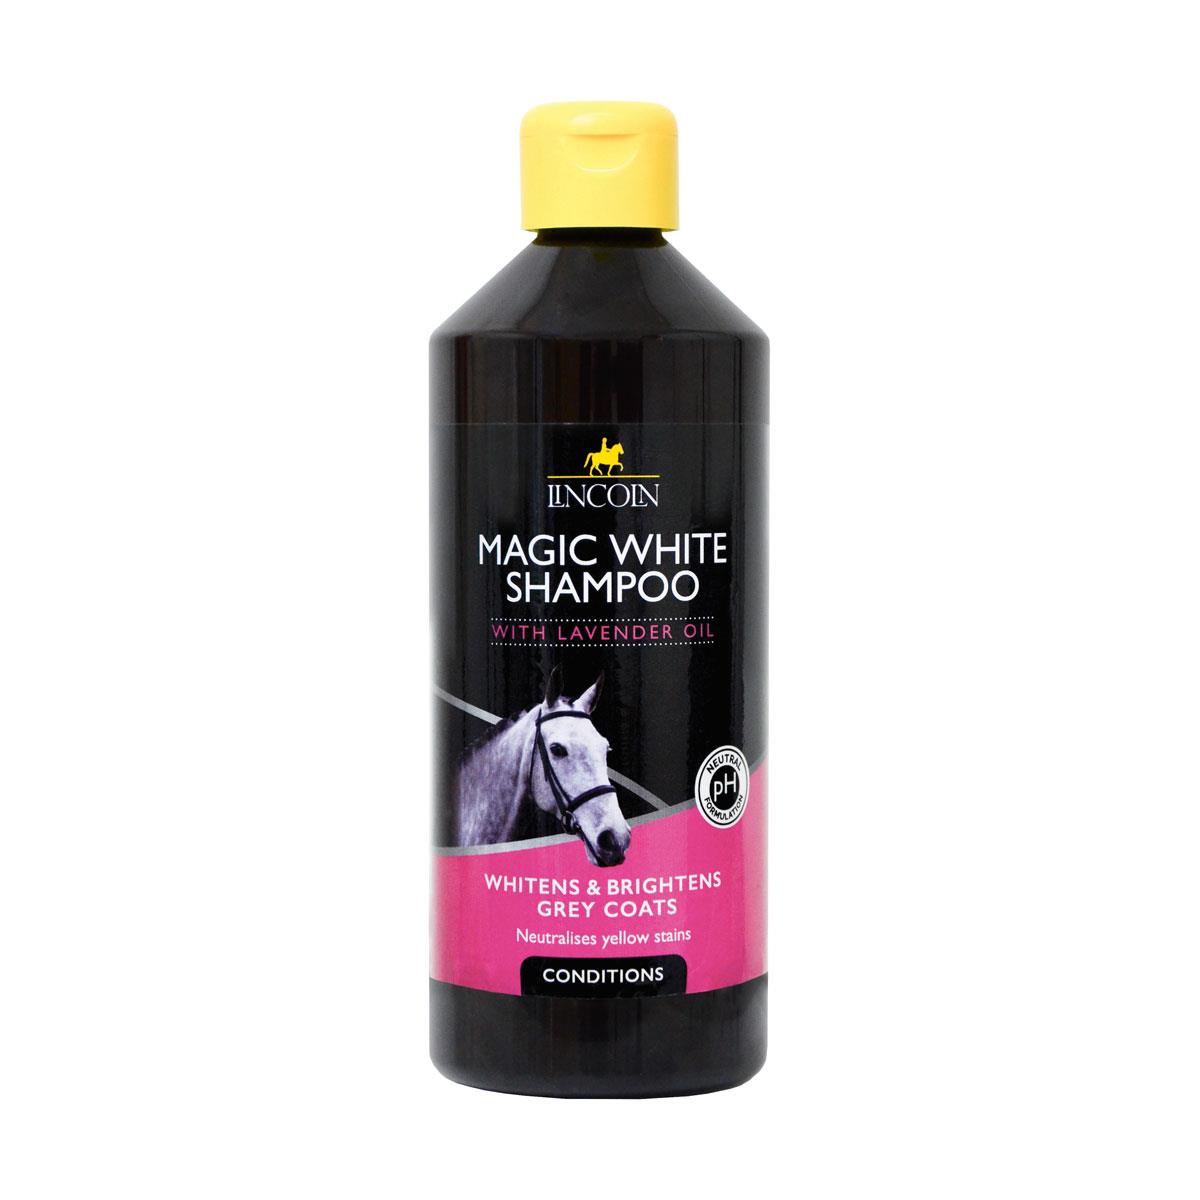 Lincoln Magic White Horse Shampoo - Just Horse Riders